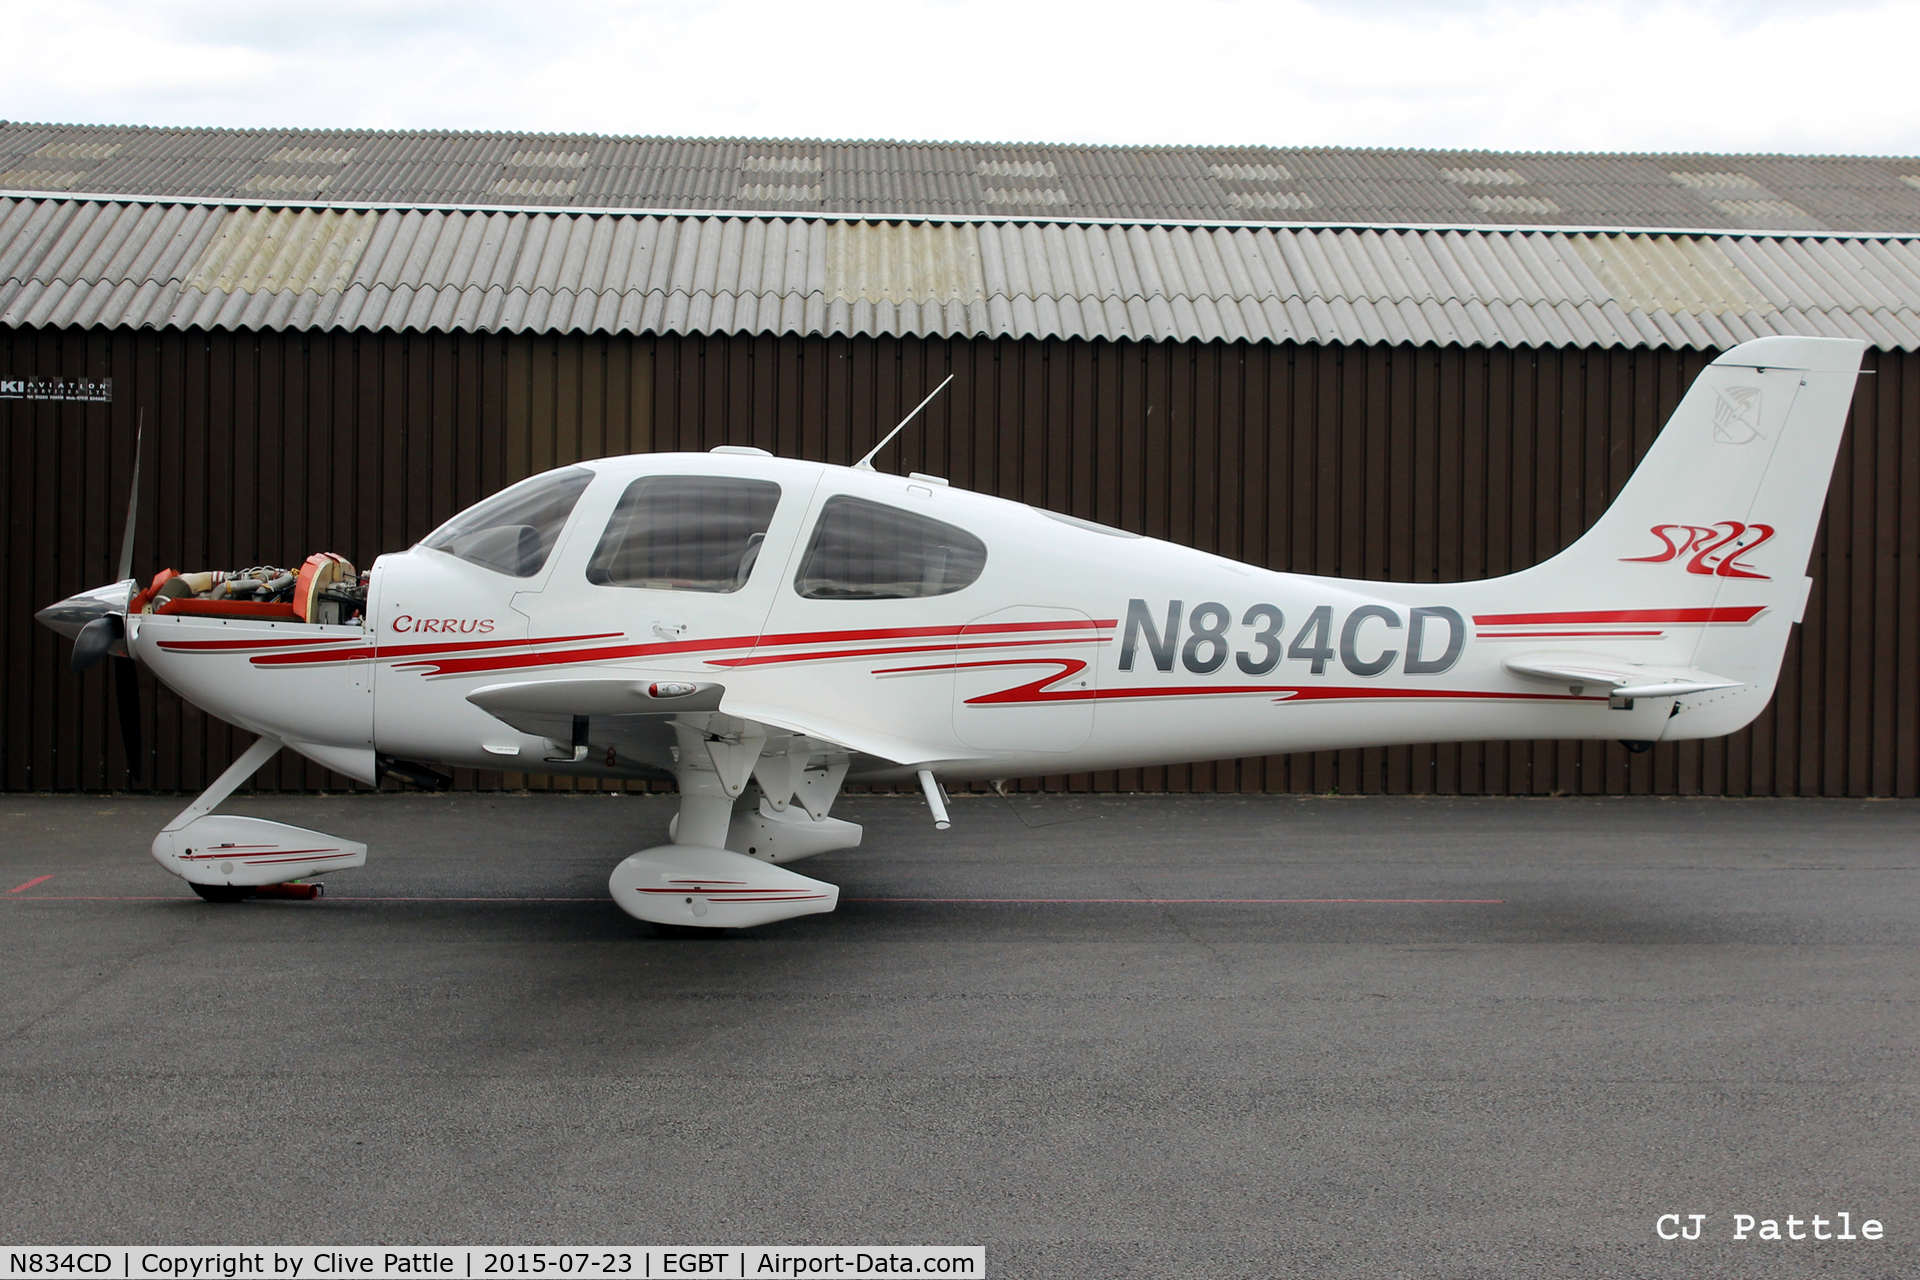 N834CD, 2002 Cirrus SR22 C/N 0168, Parked up at Turweston Aerodrome EGBT